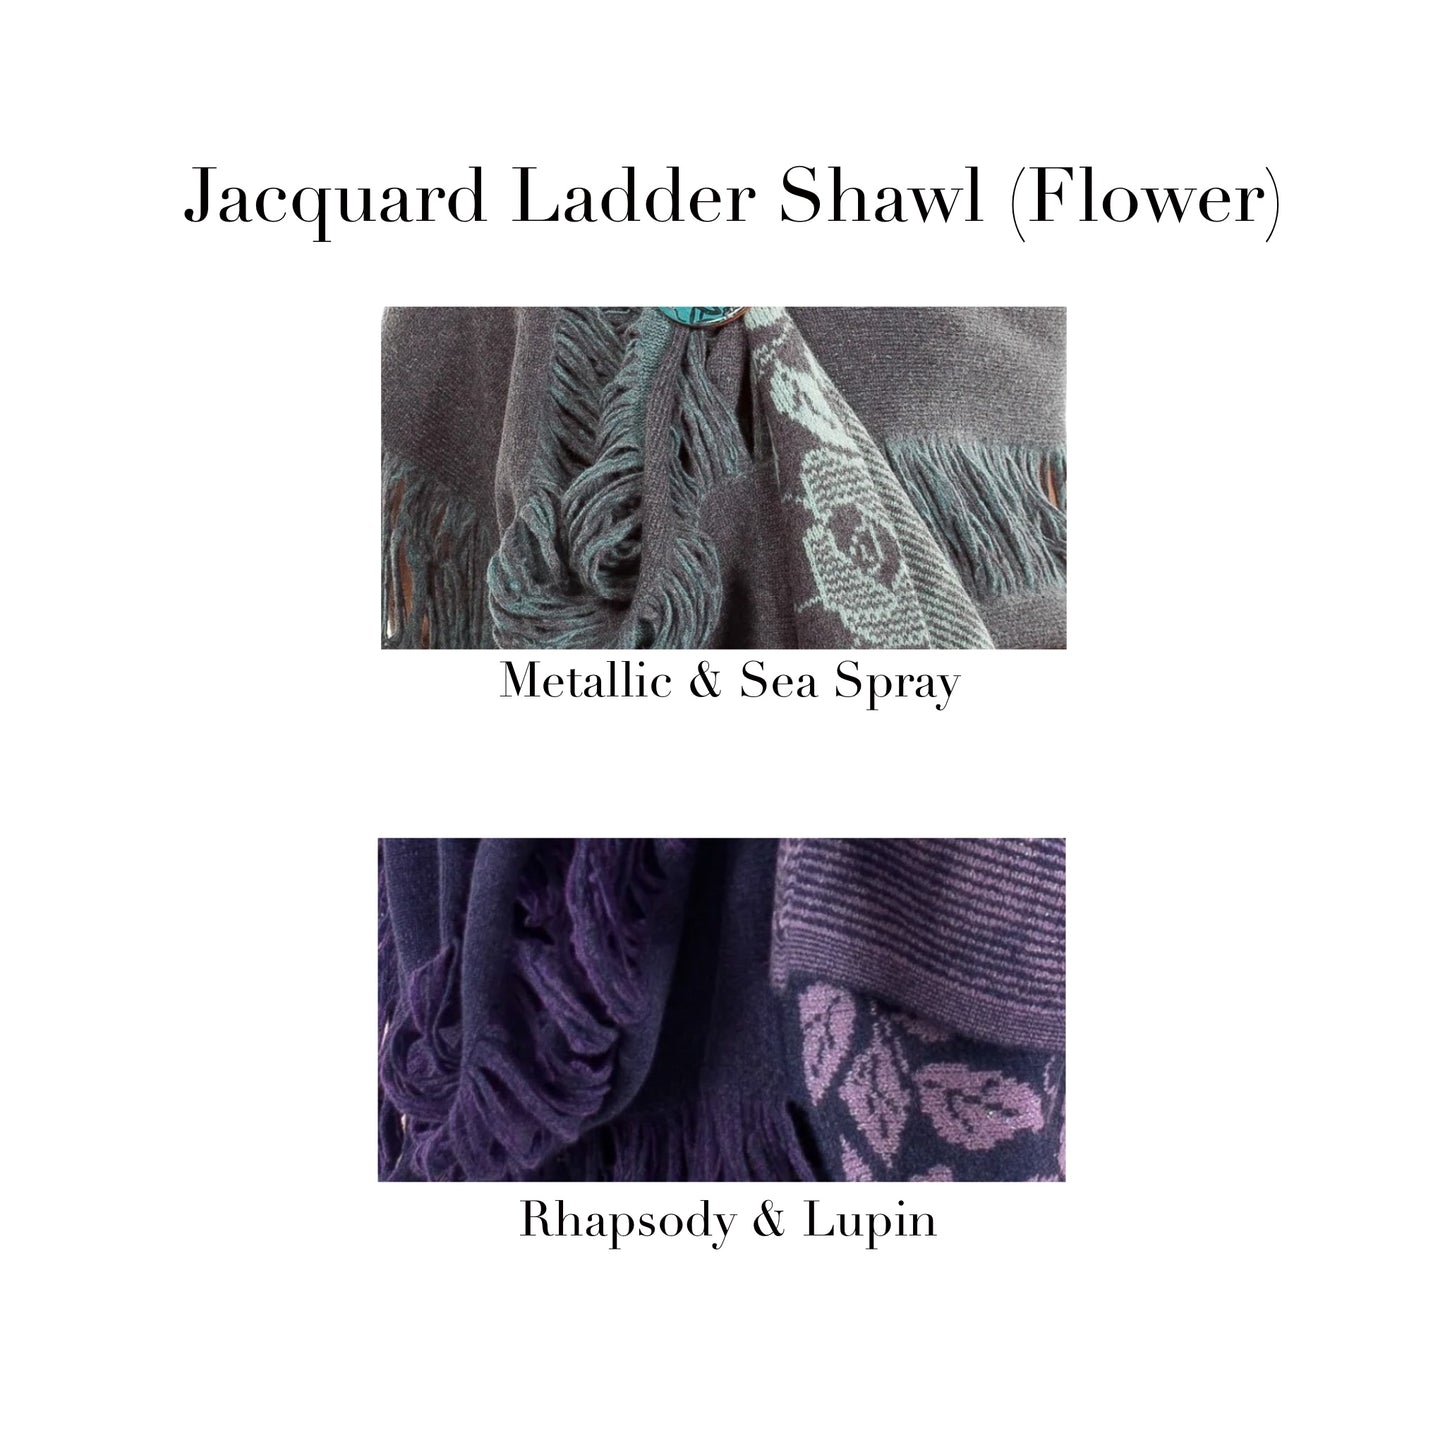 Jacquard Ladders Shawl (Flower)